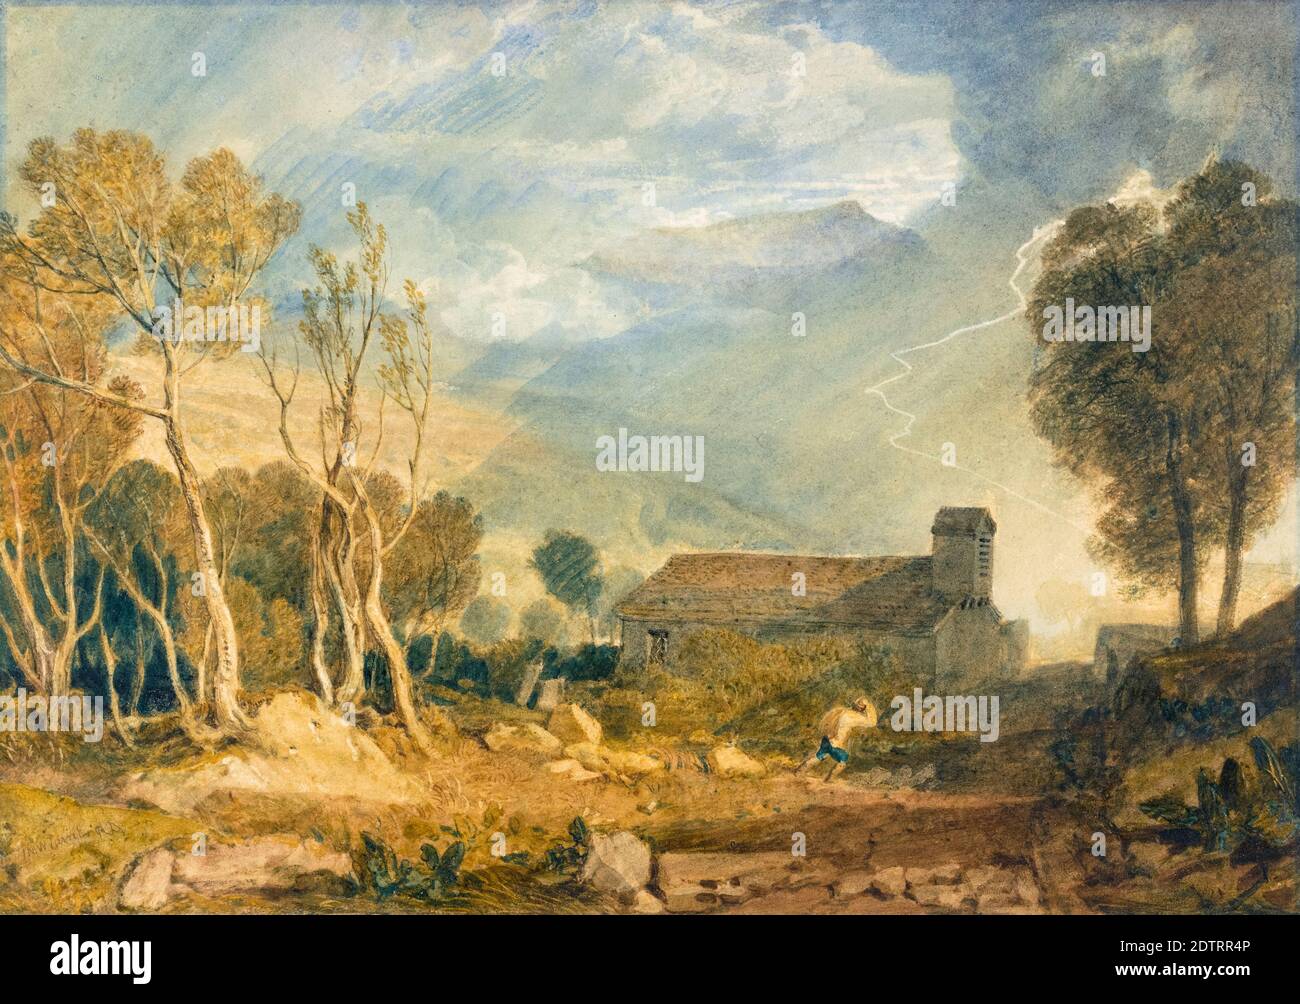 JMW Turner, Ingleborough from Chapel-Le-Dale, landscape painting, 1810-1815 Stock Photo